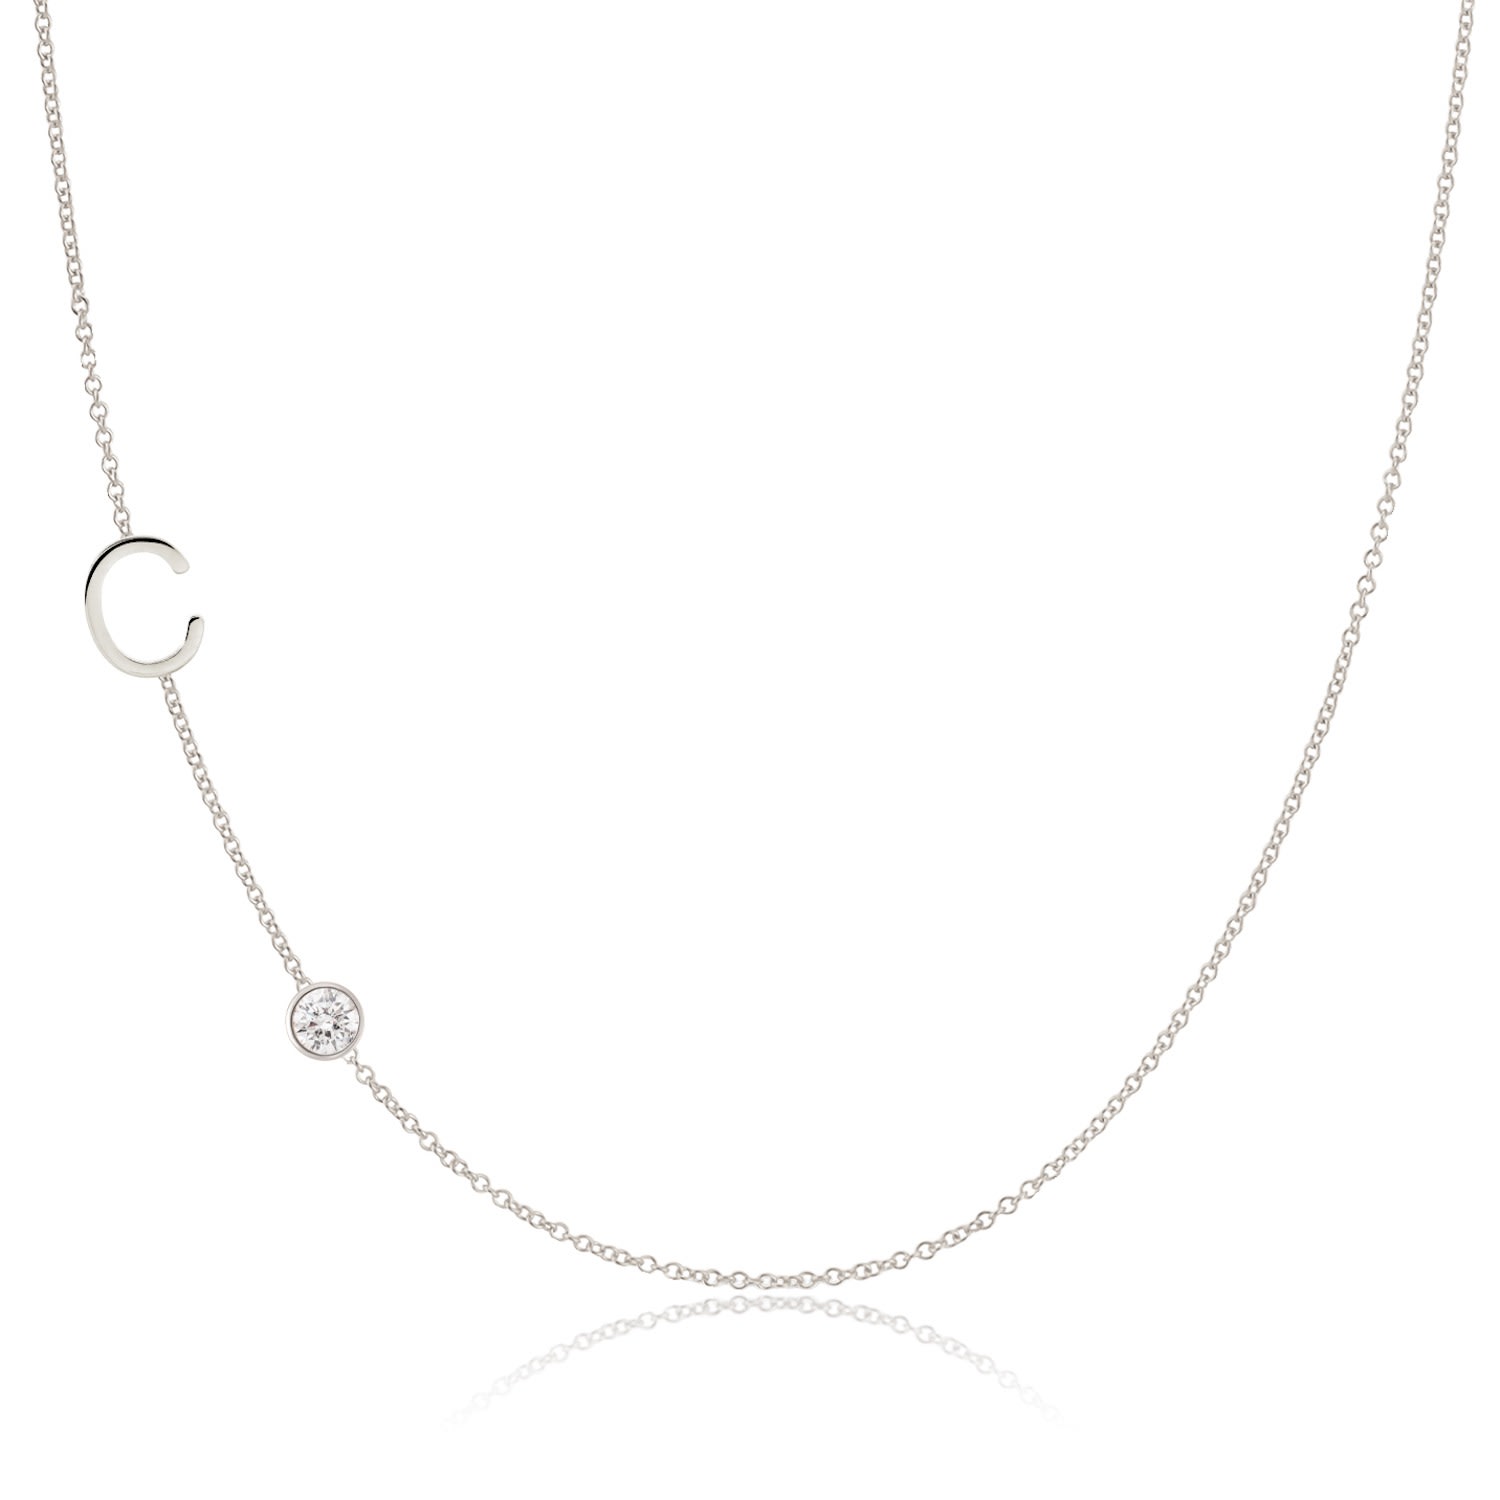 Women’s Monogram Necklace With Diamond - White Gold - 16" Maya Brenner